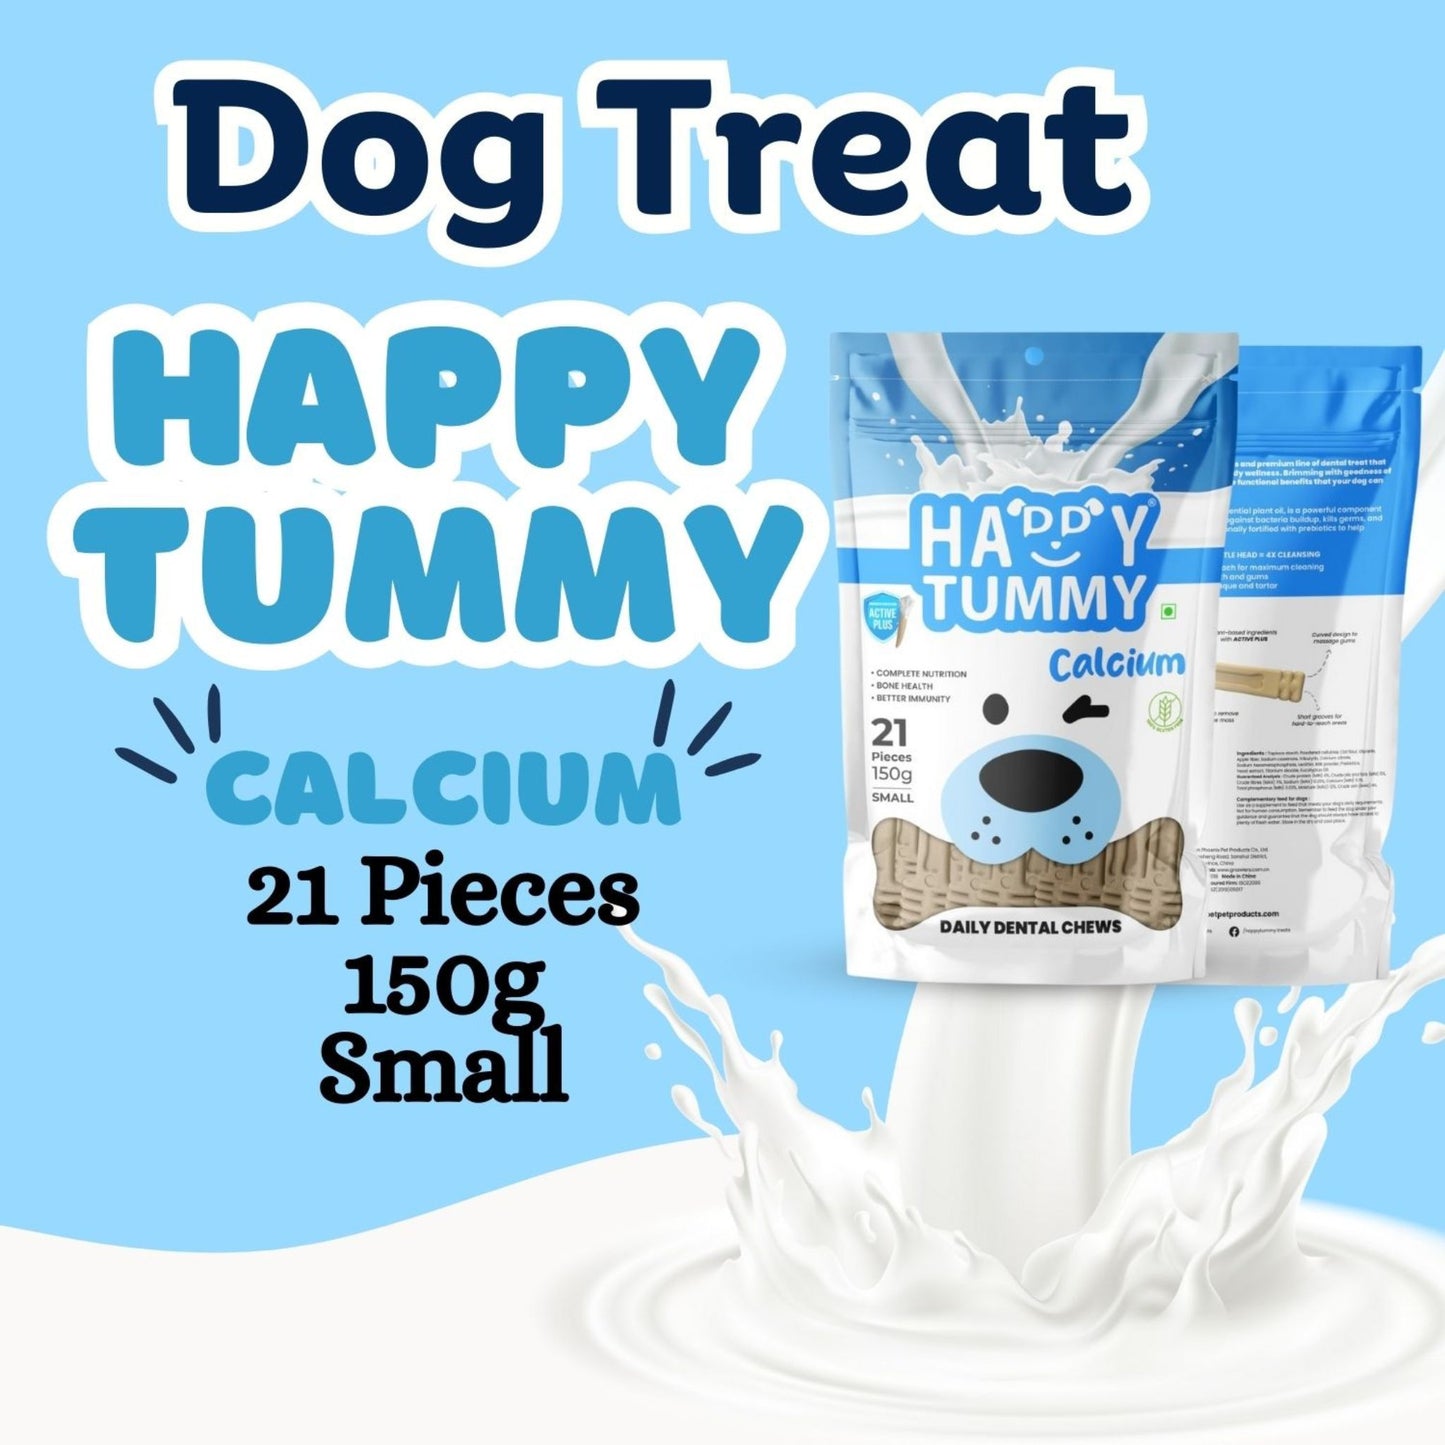 Happy Tummy Dental Chew Bone Treat for Dogs - 21Pcs, Small (Calcium)